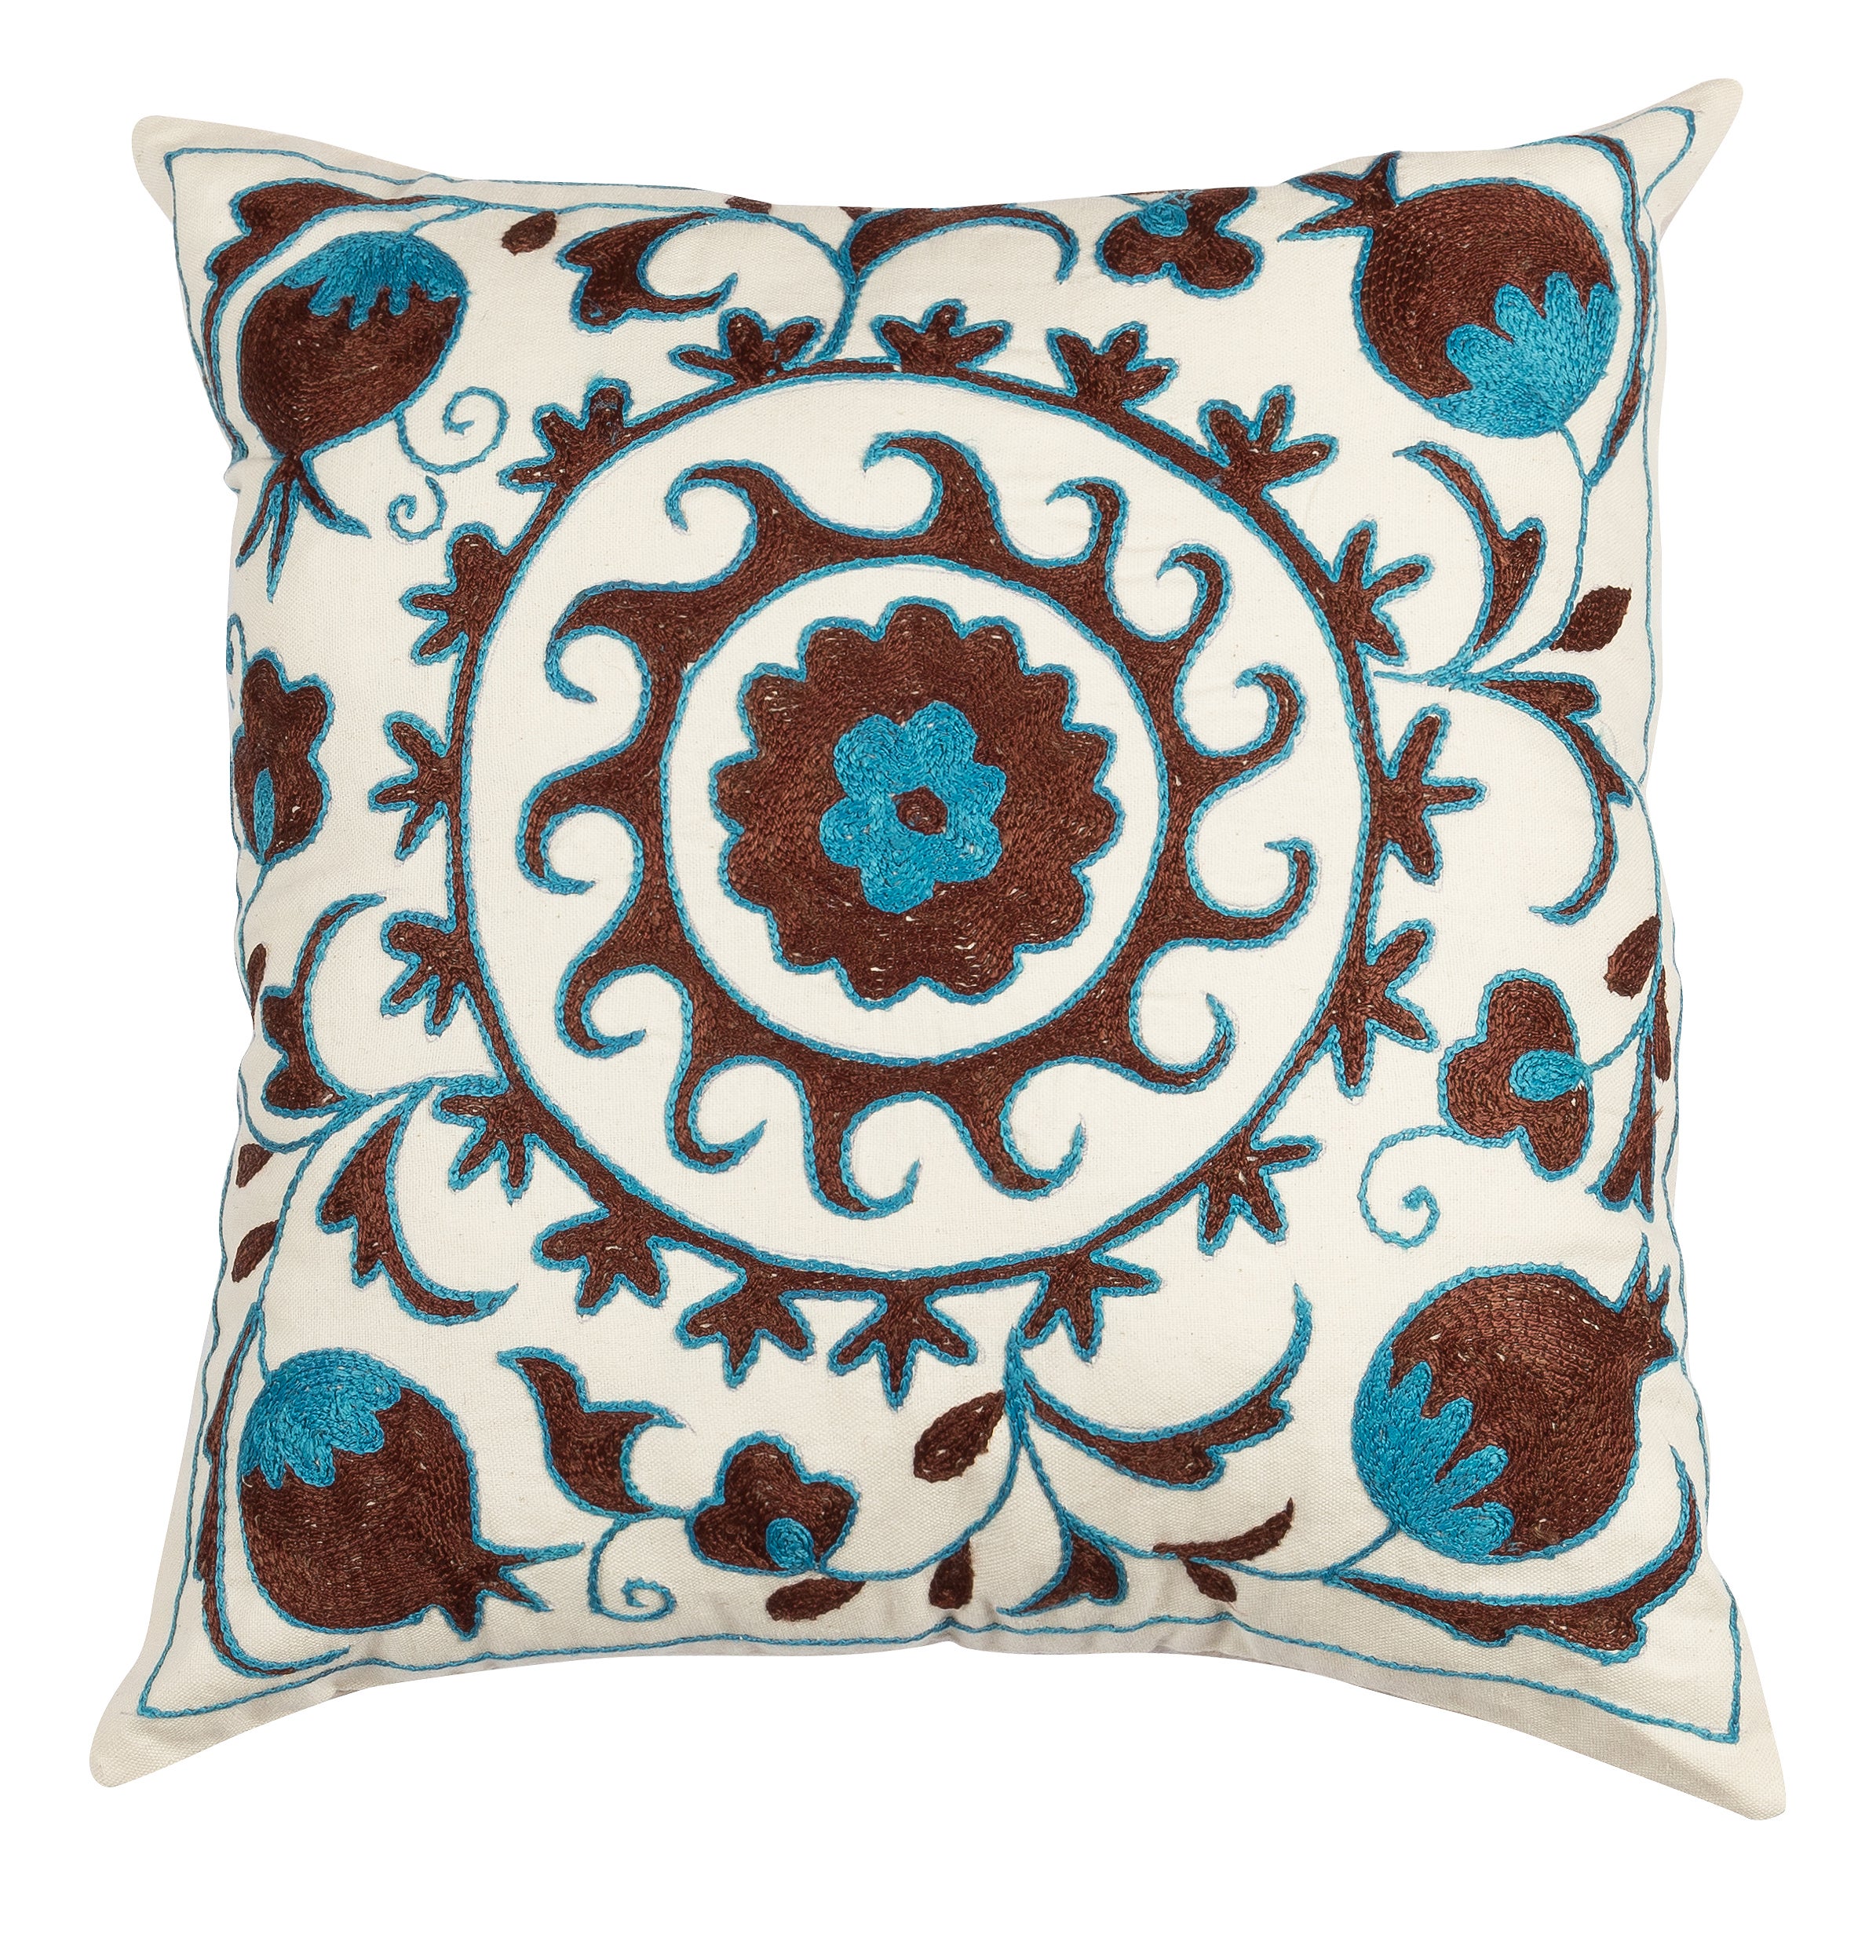 18''x18'' Square Silk Hand Embroidery Suzani Cushion Cover in Blue, Cream, Brown